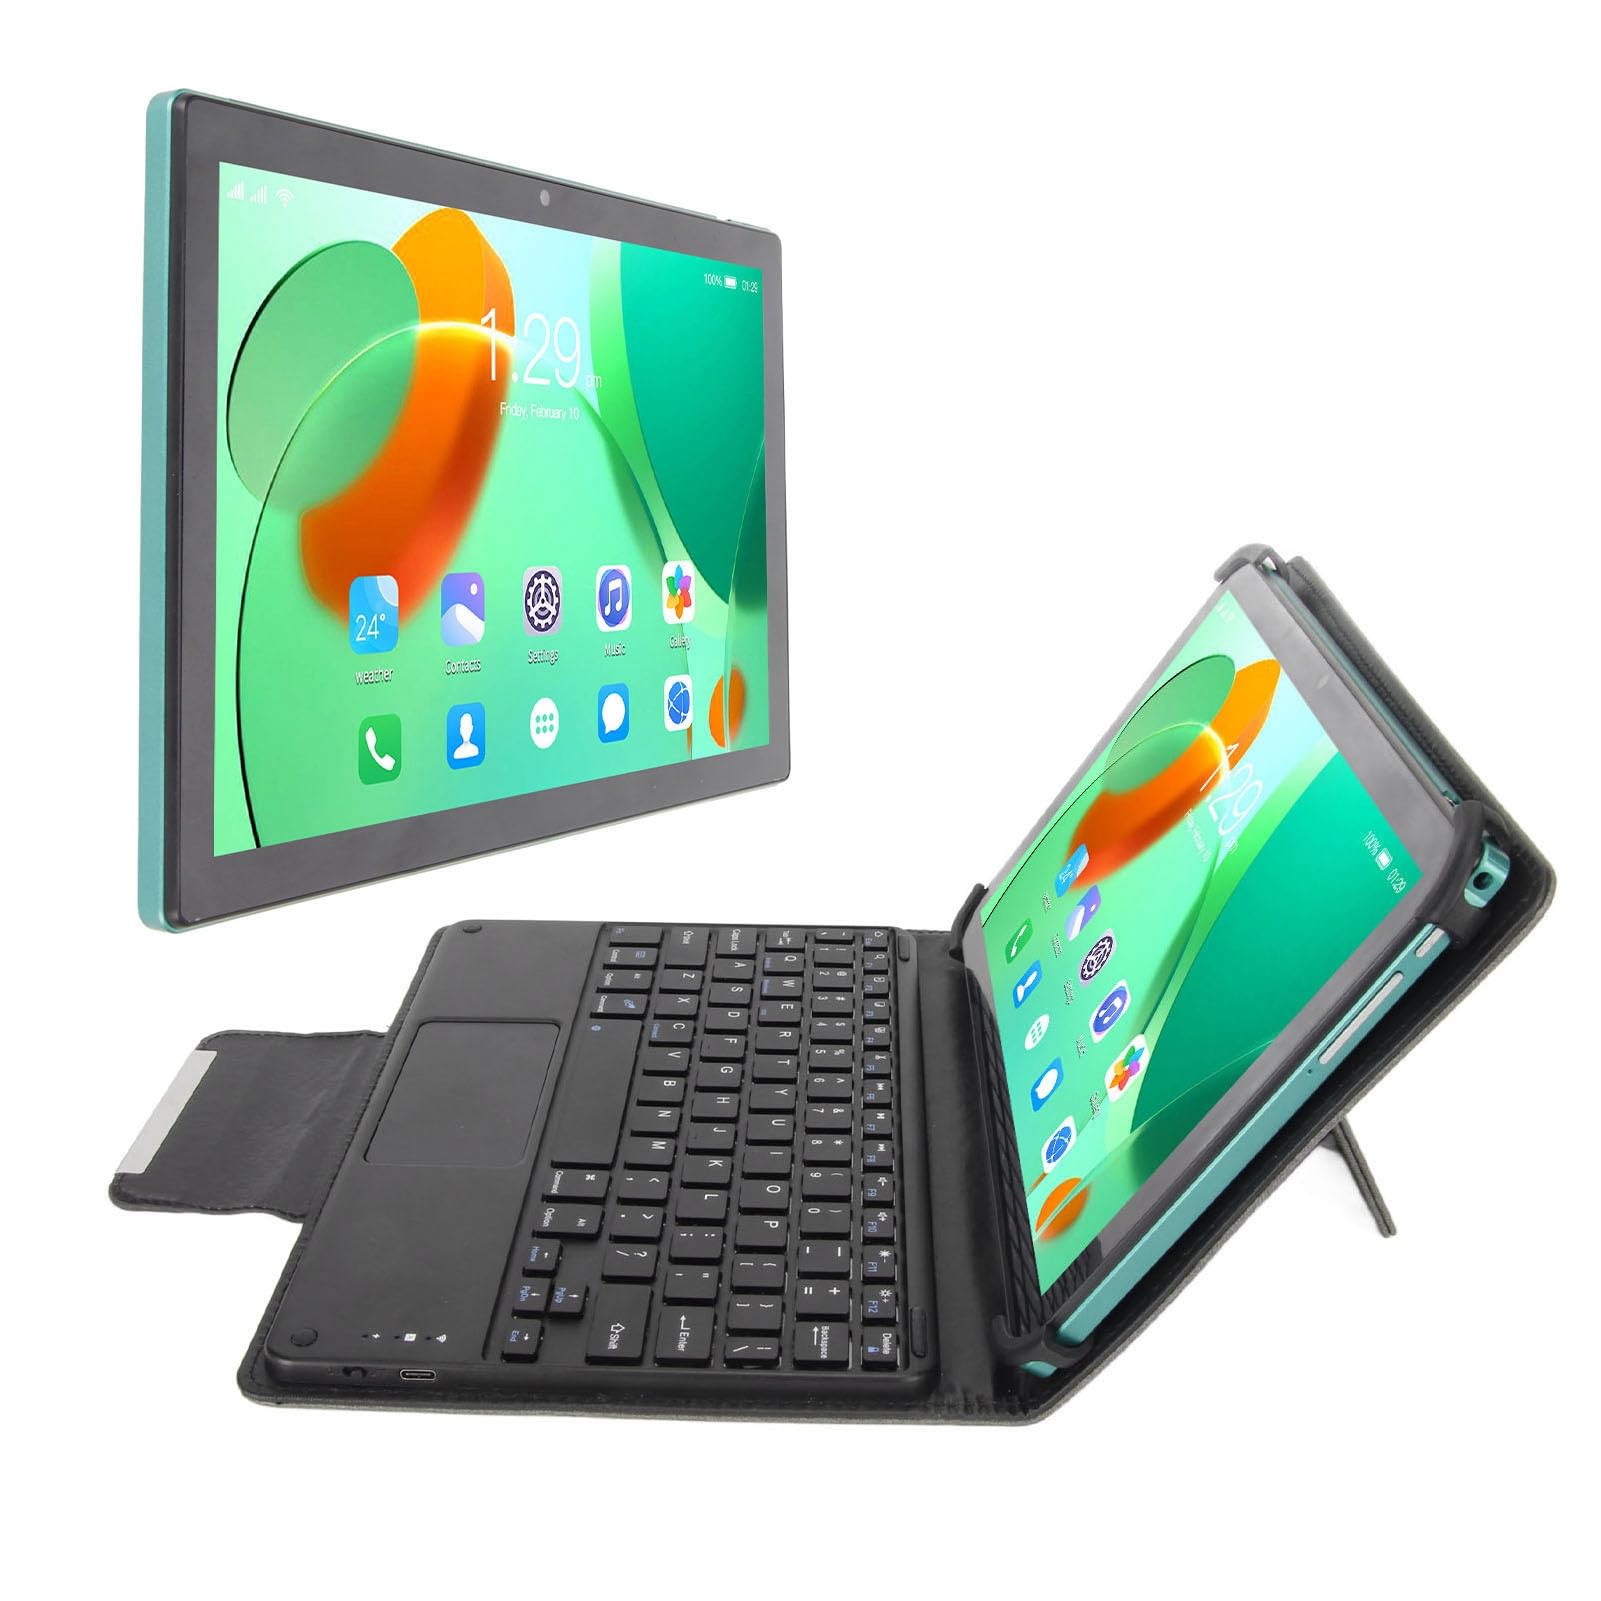 10.1 Inch 8 Core CPU 8GB RAM 256GB ROM 5G WiFi Tablet with Keyboard - Green, FHD Screen, Fast Charging (US Plug)